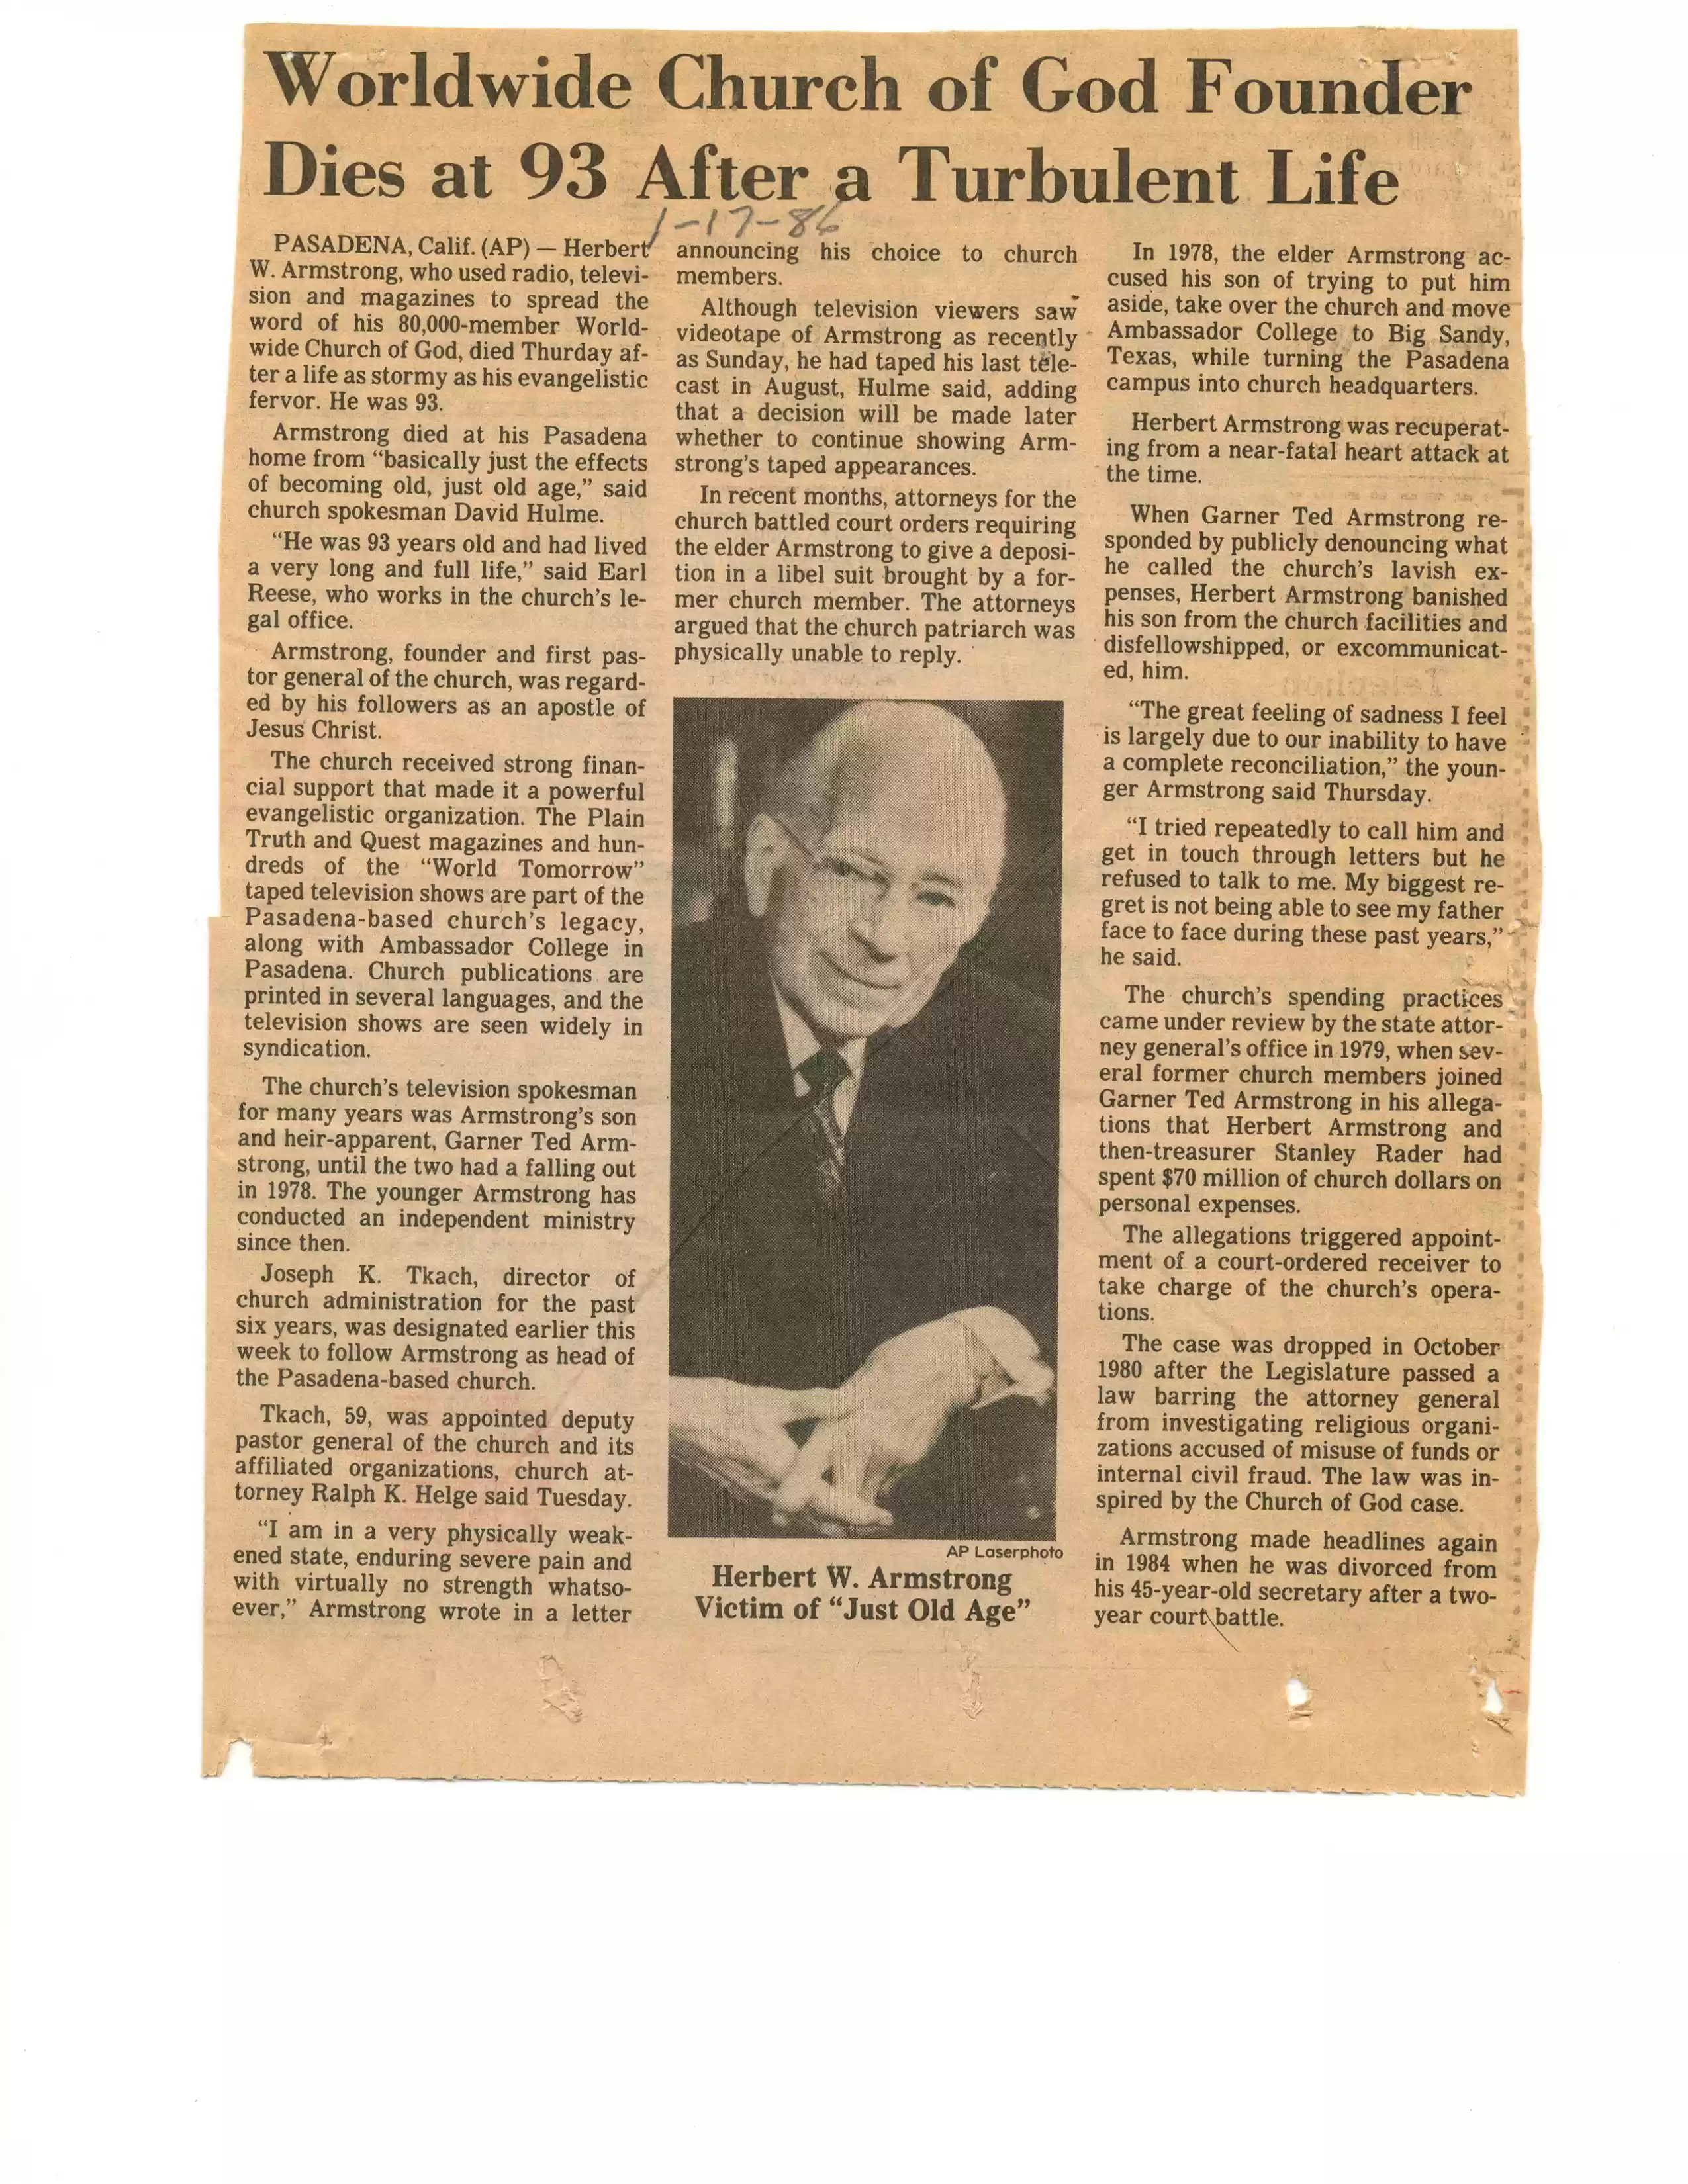 Salt Lake Tribune, 1-17-86